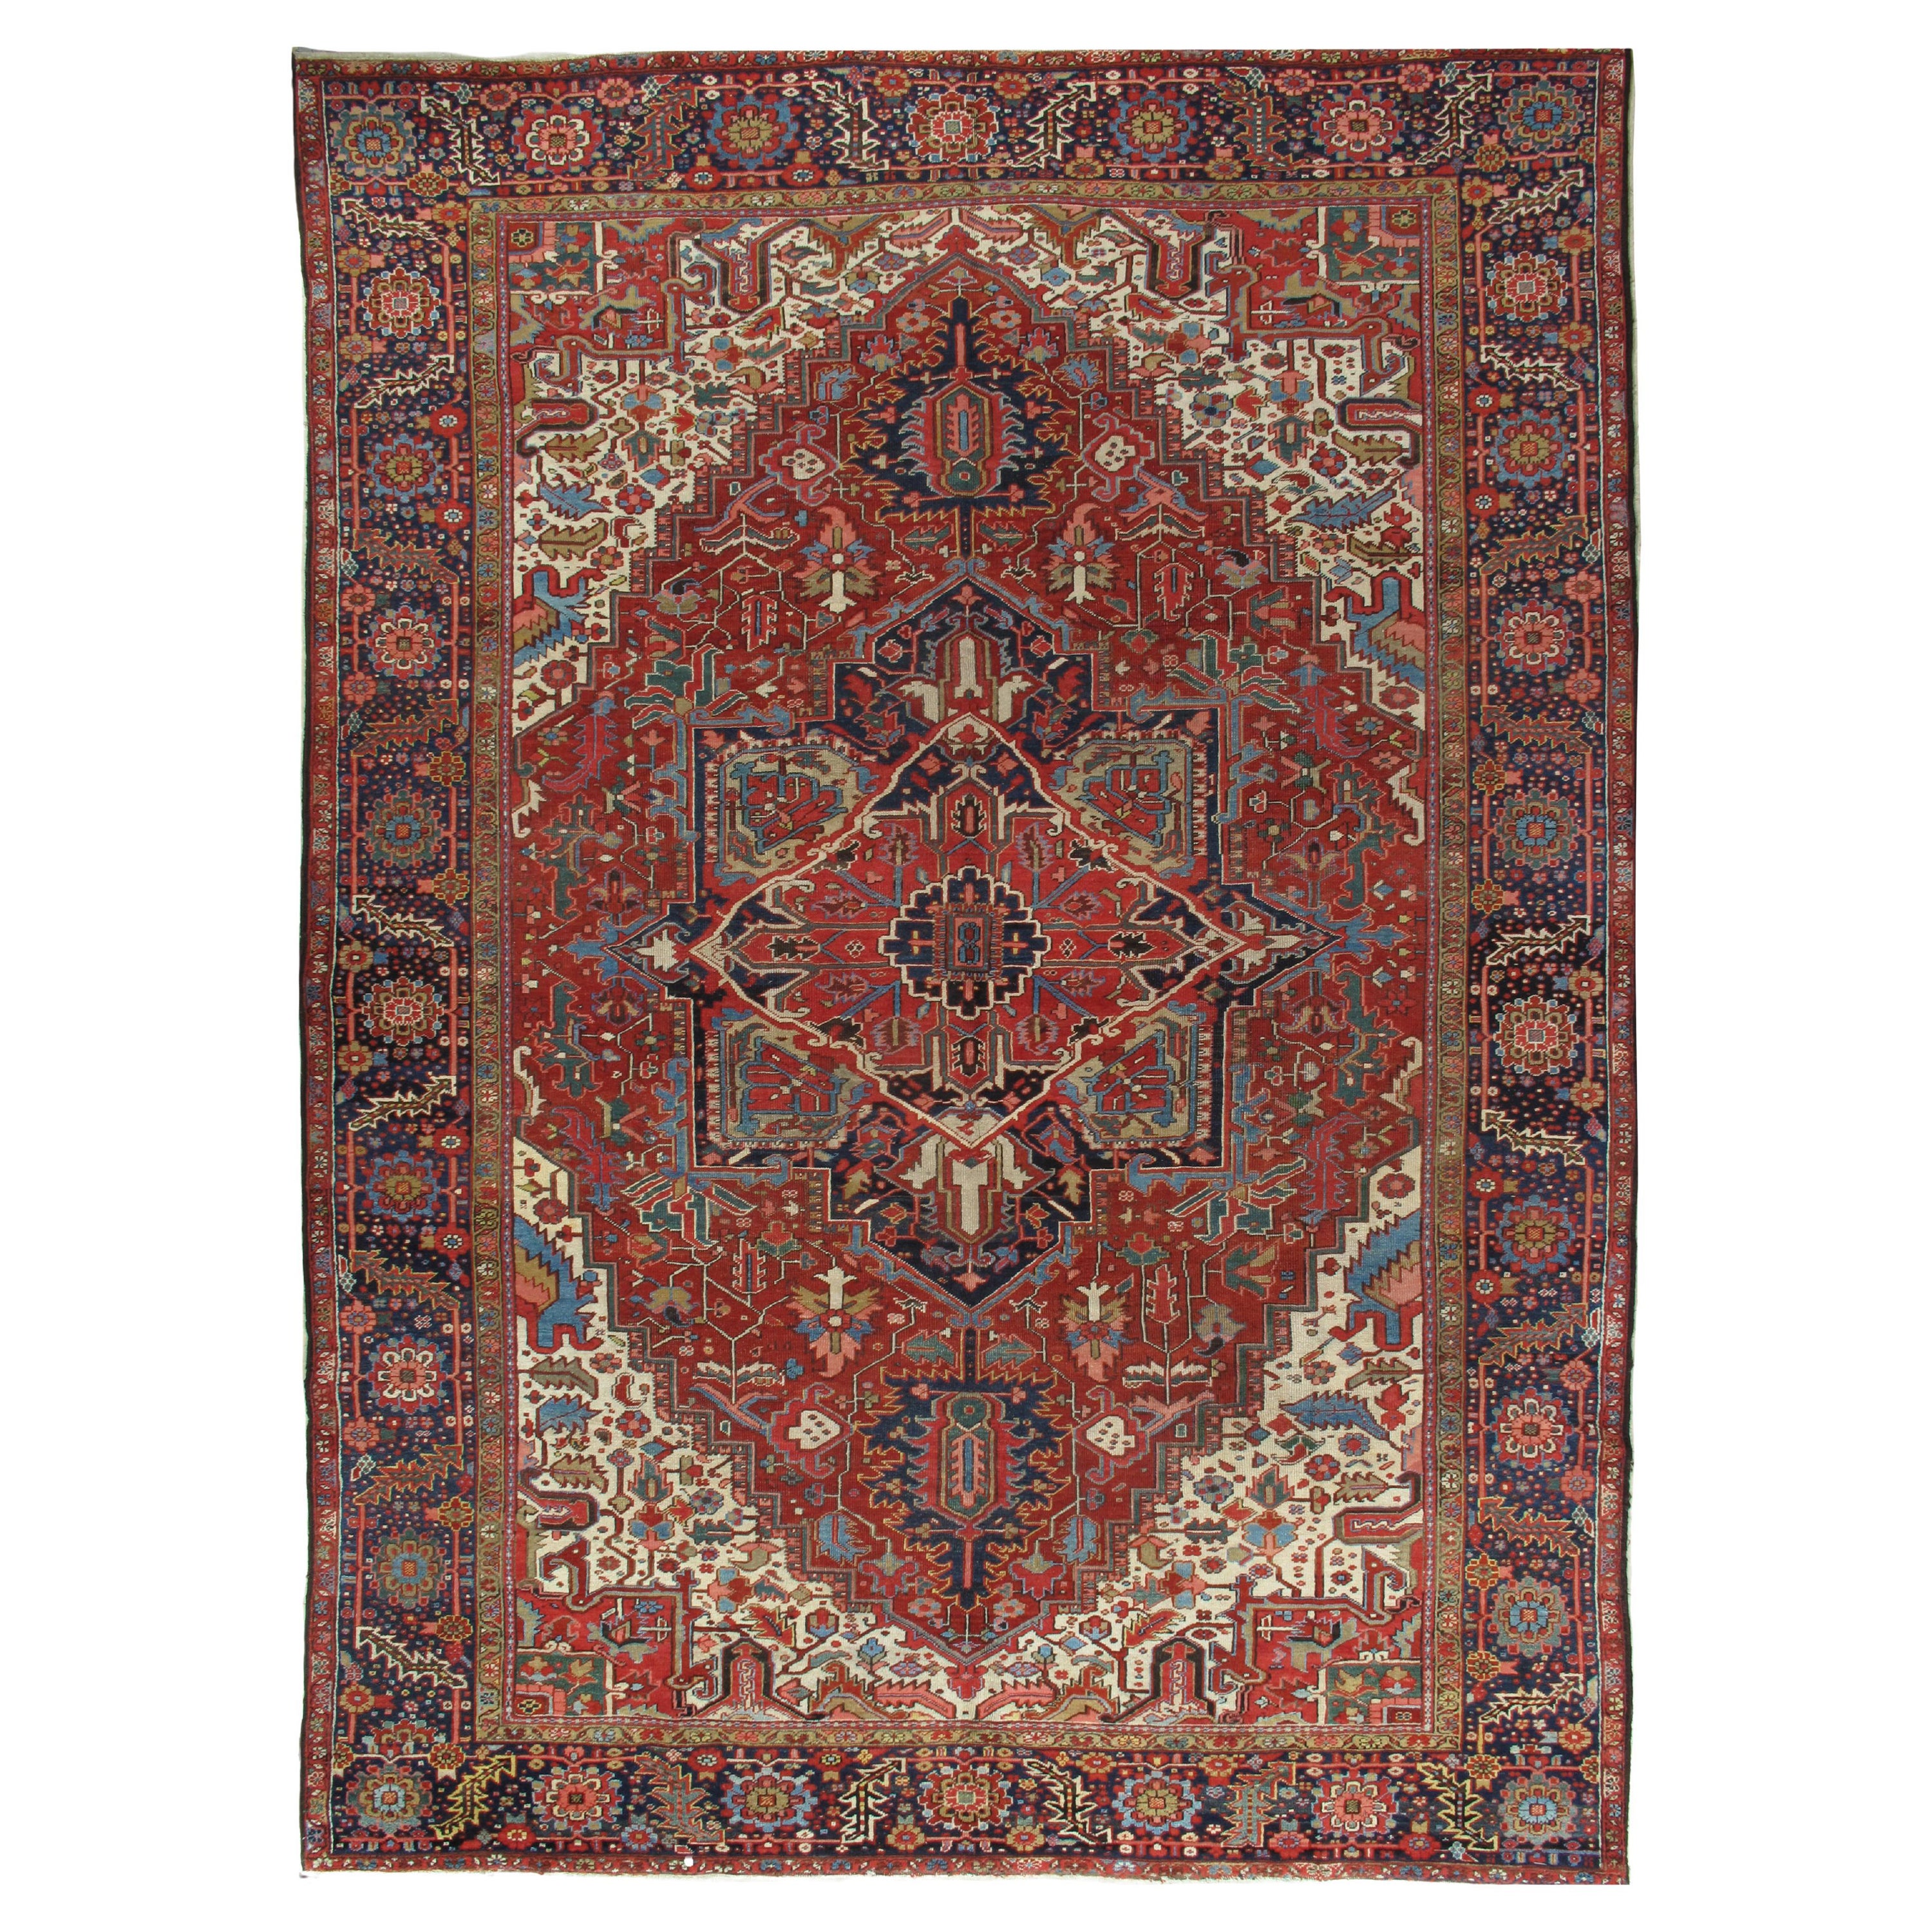 Antique Persian Heriz Carpet, Handmade Wool Oriental Rug, Rust, Navy, Lt Blue